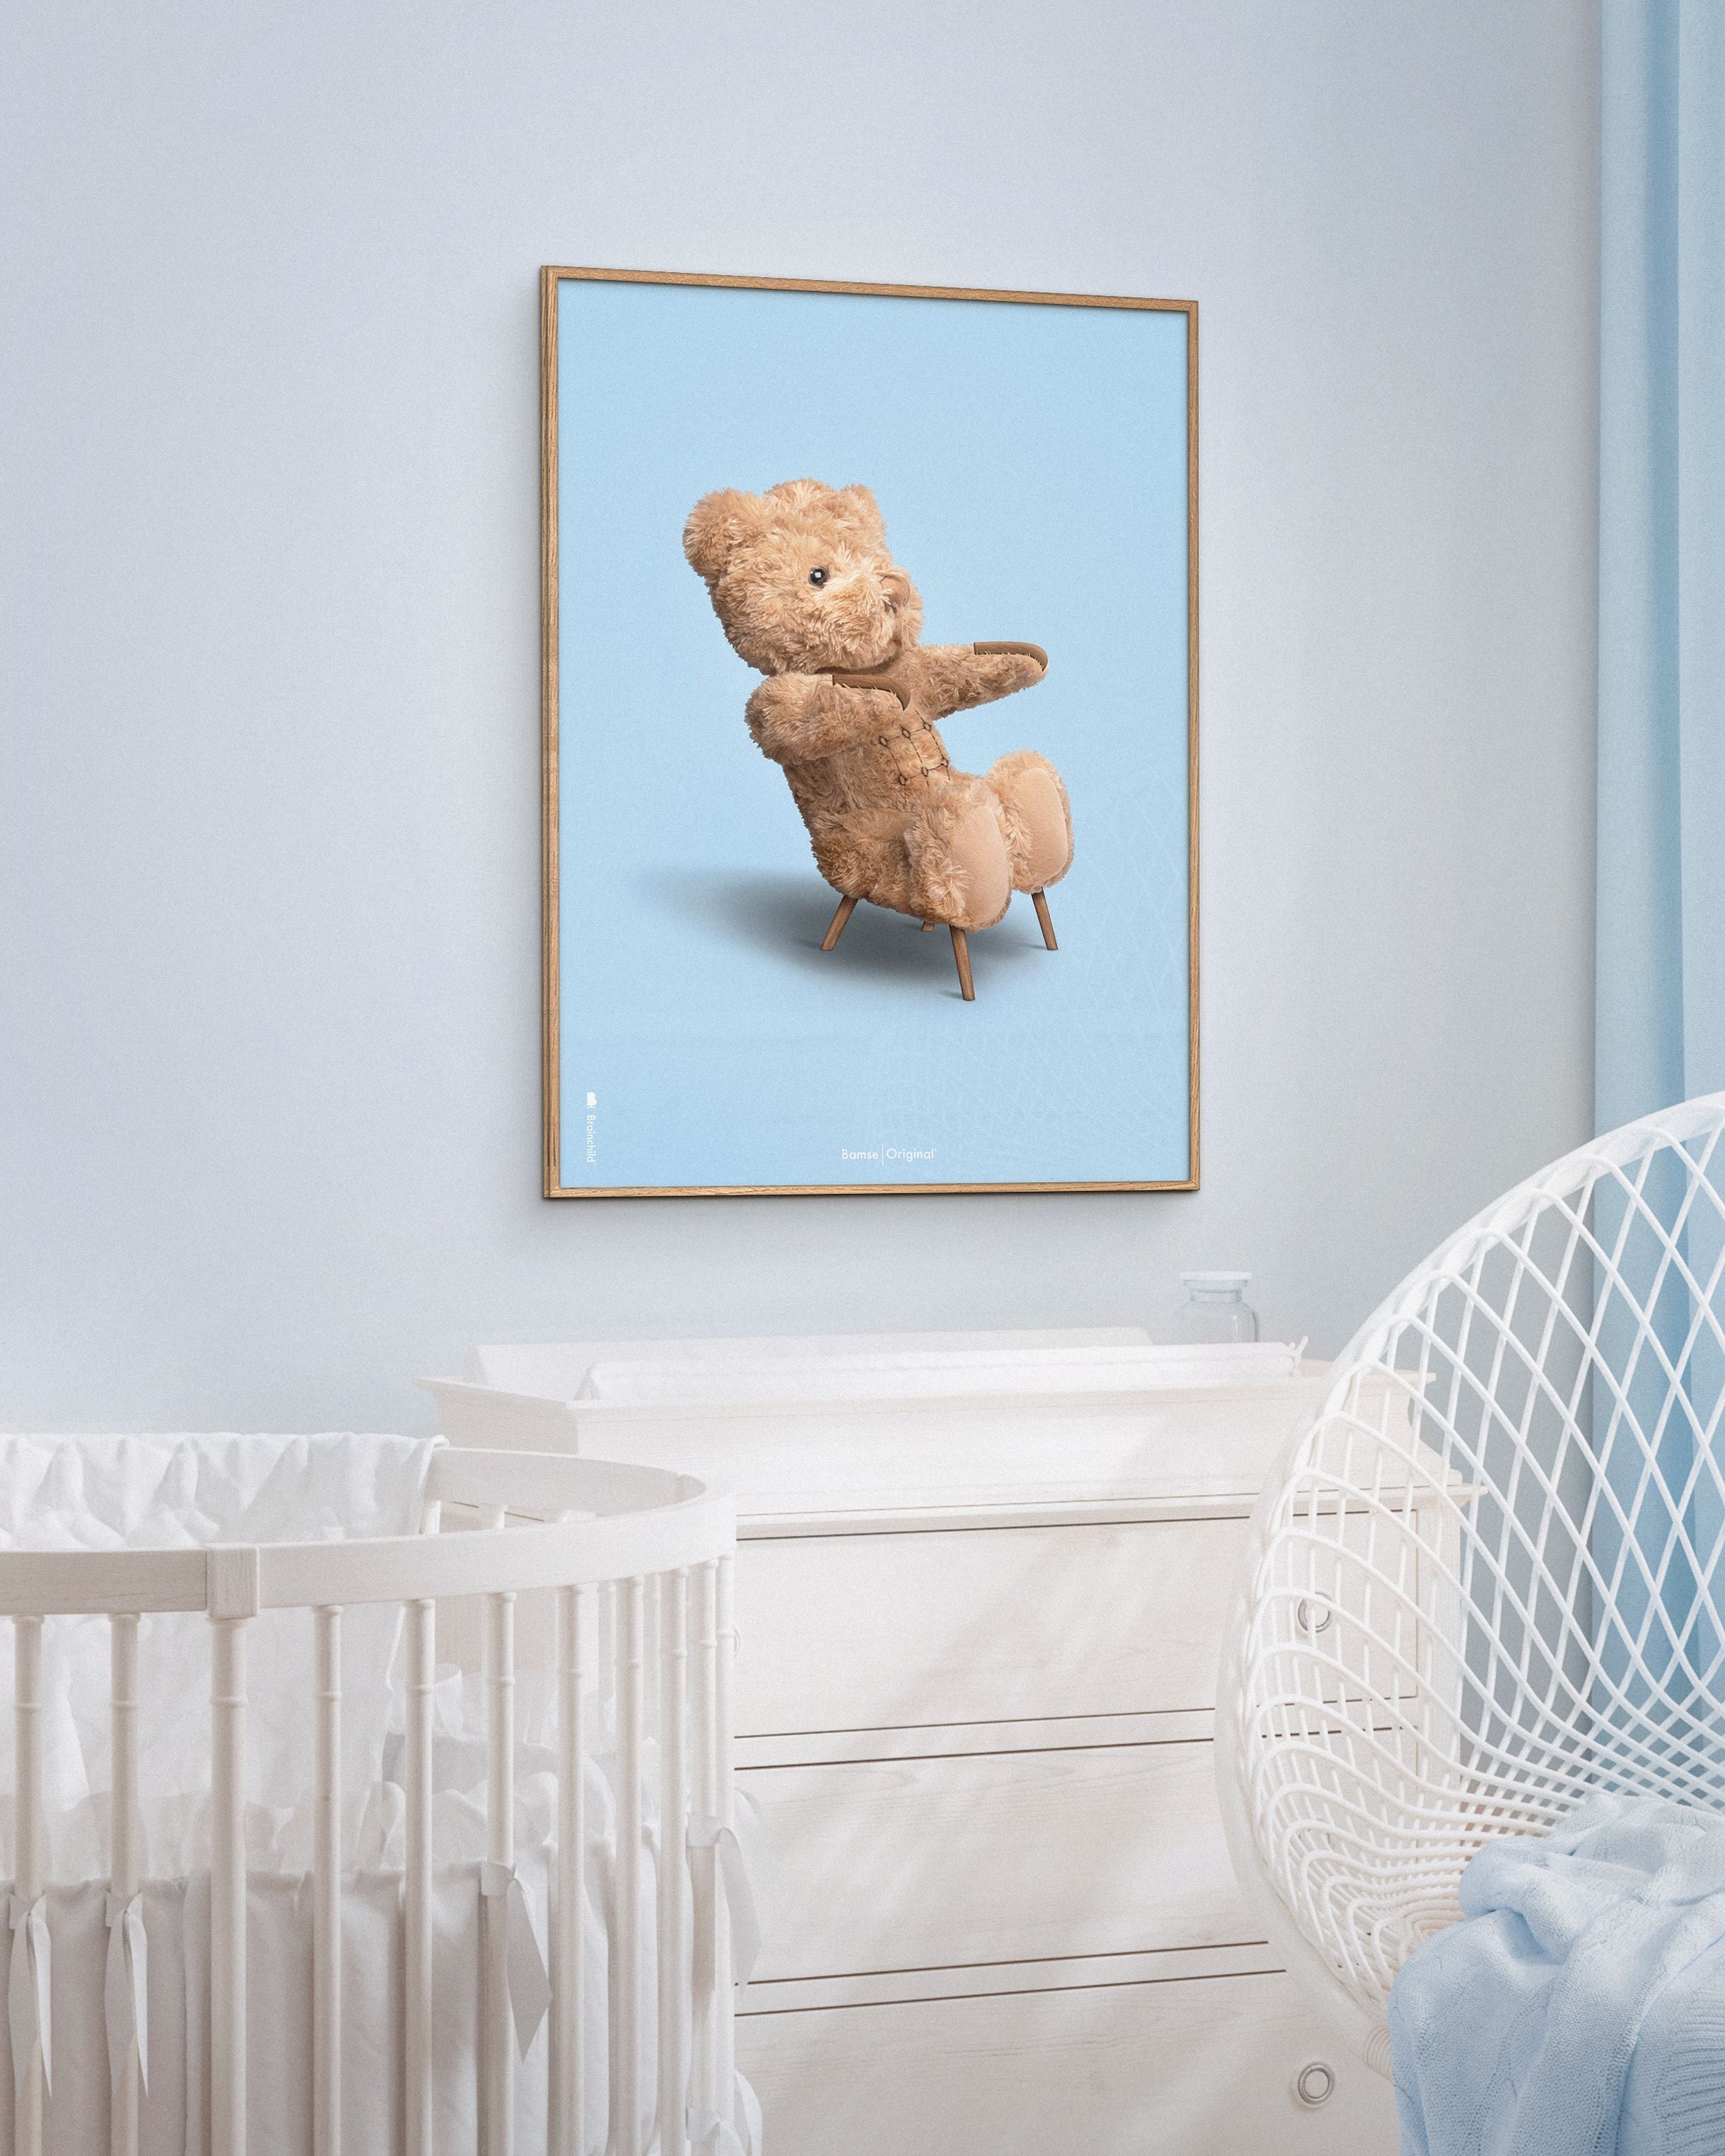 Brainchild Teddy Bear Classic Poster Brass Colored Frame A5, Light Blue Background